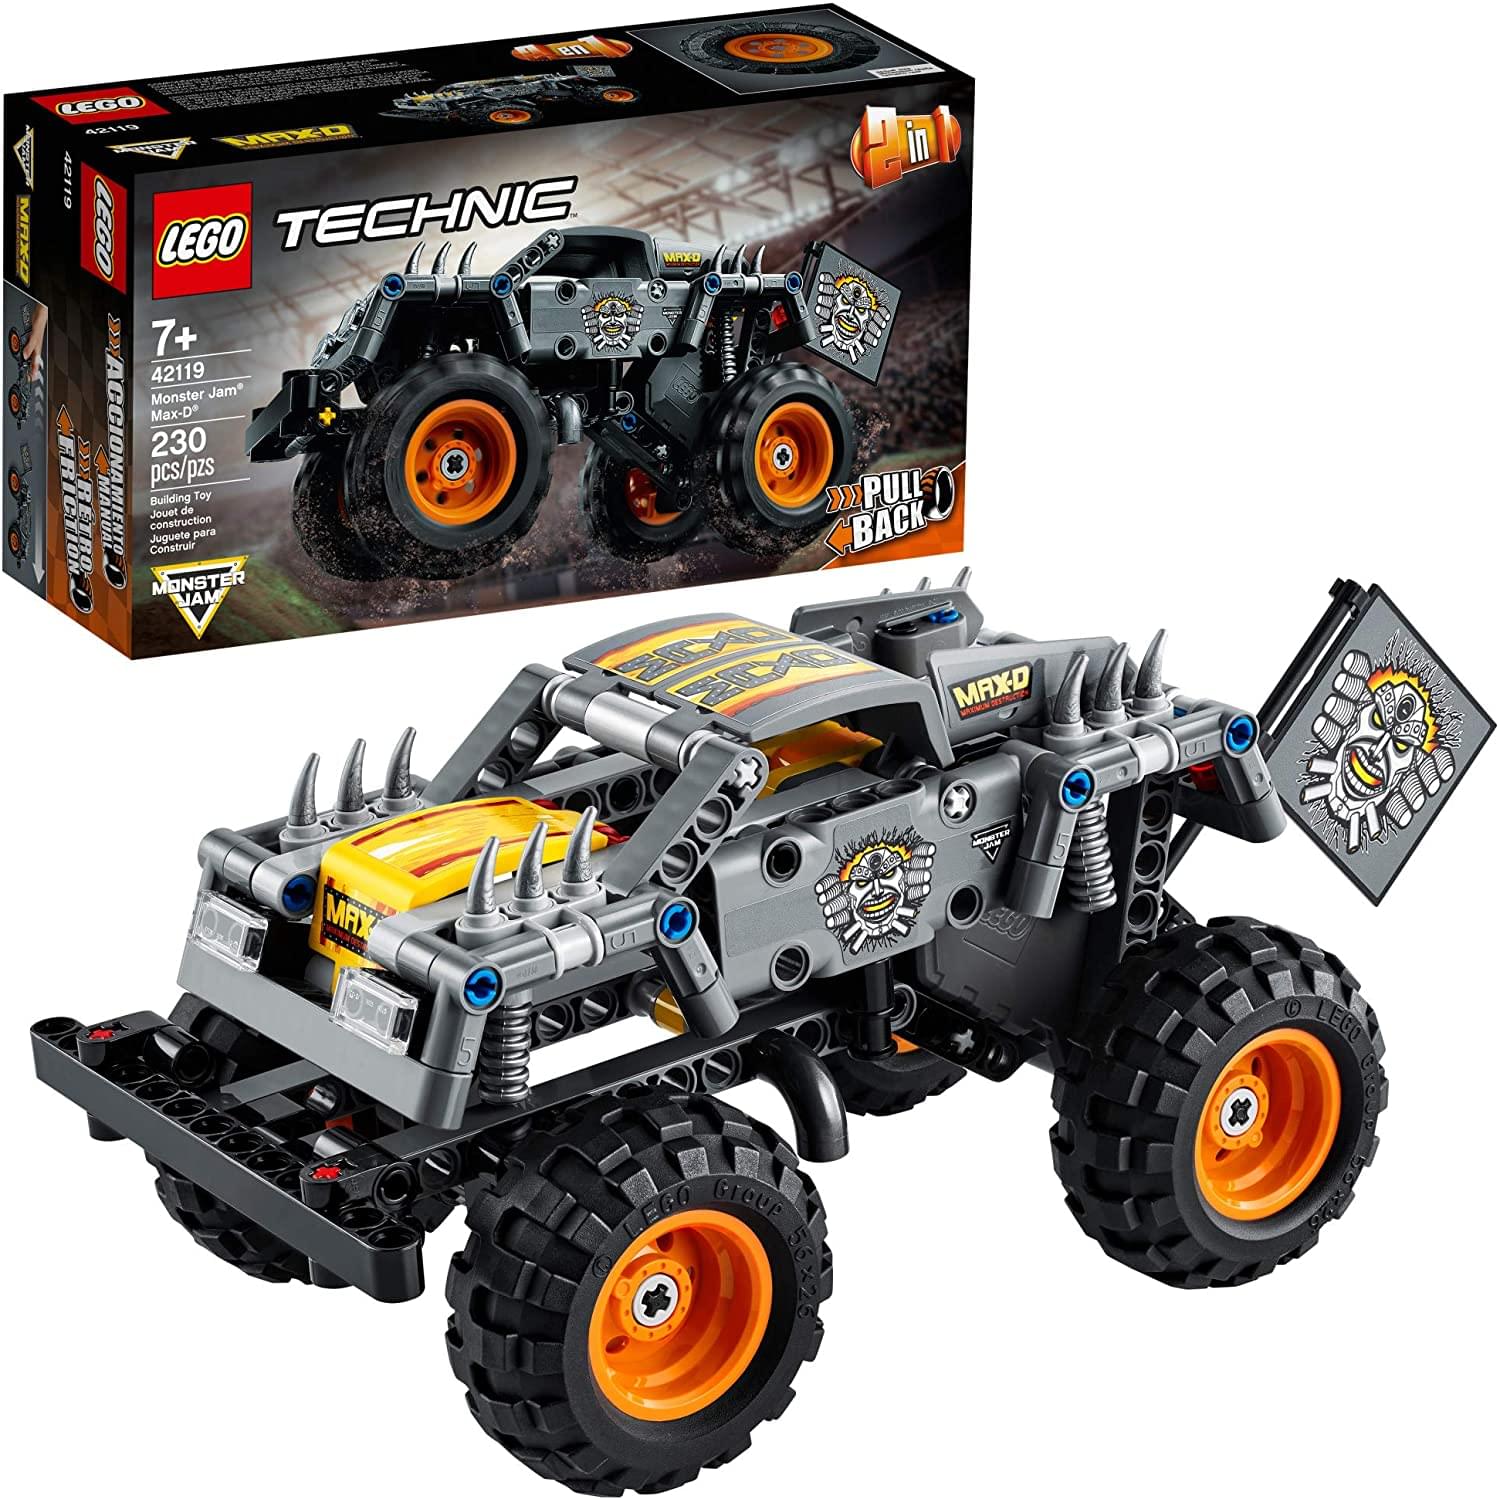 LEGO Technic 42119 Monster Jam Max-DM 230 Piece Building Kit